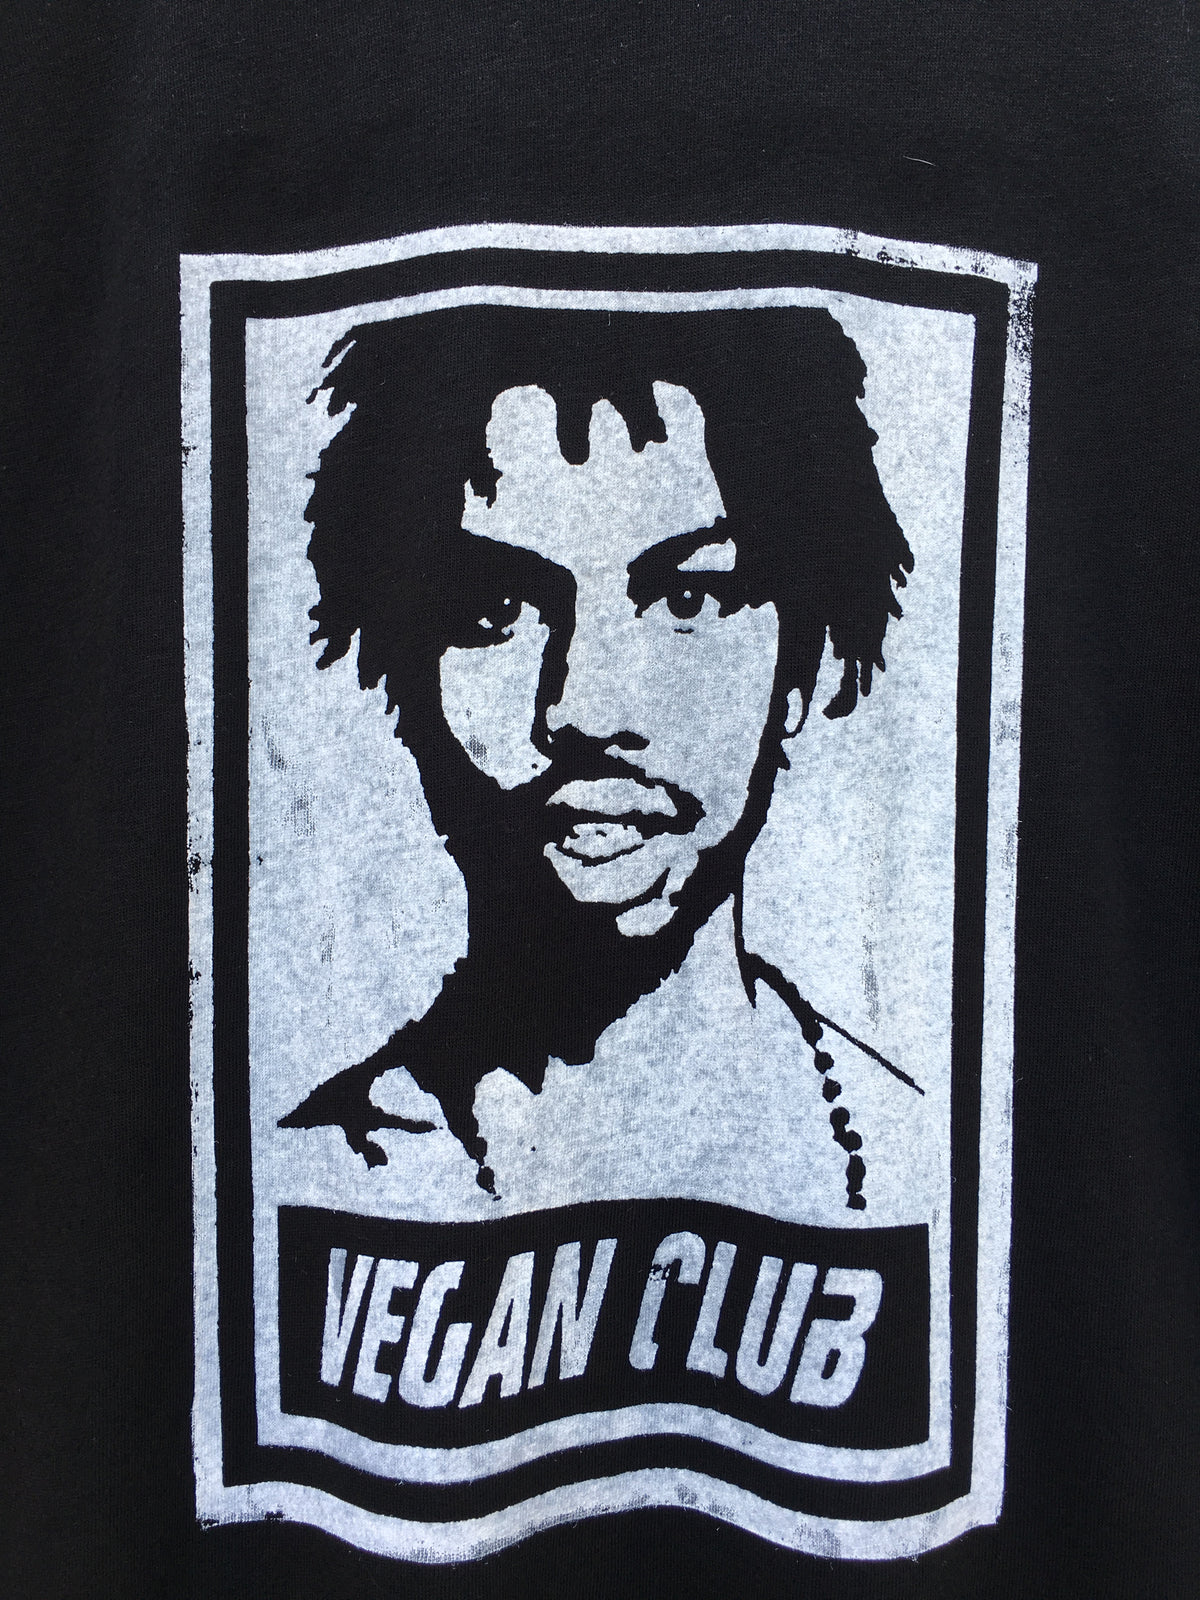 Organic Made in USA T-shirt "Vegan Club" featuring Raury